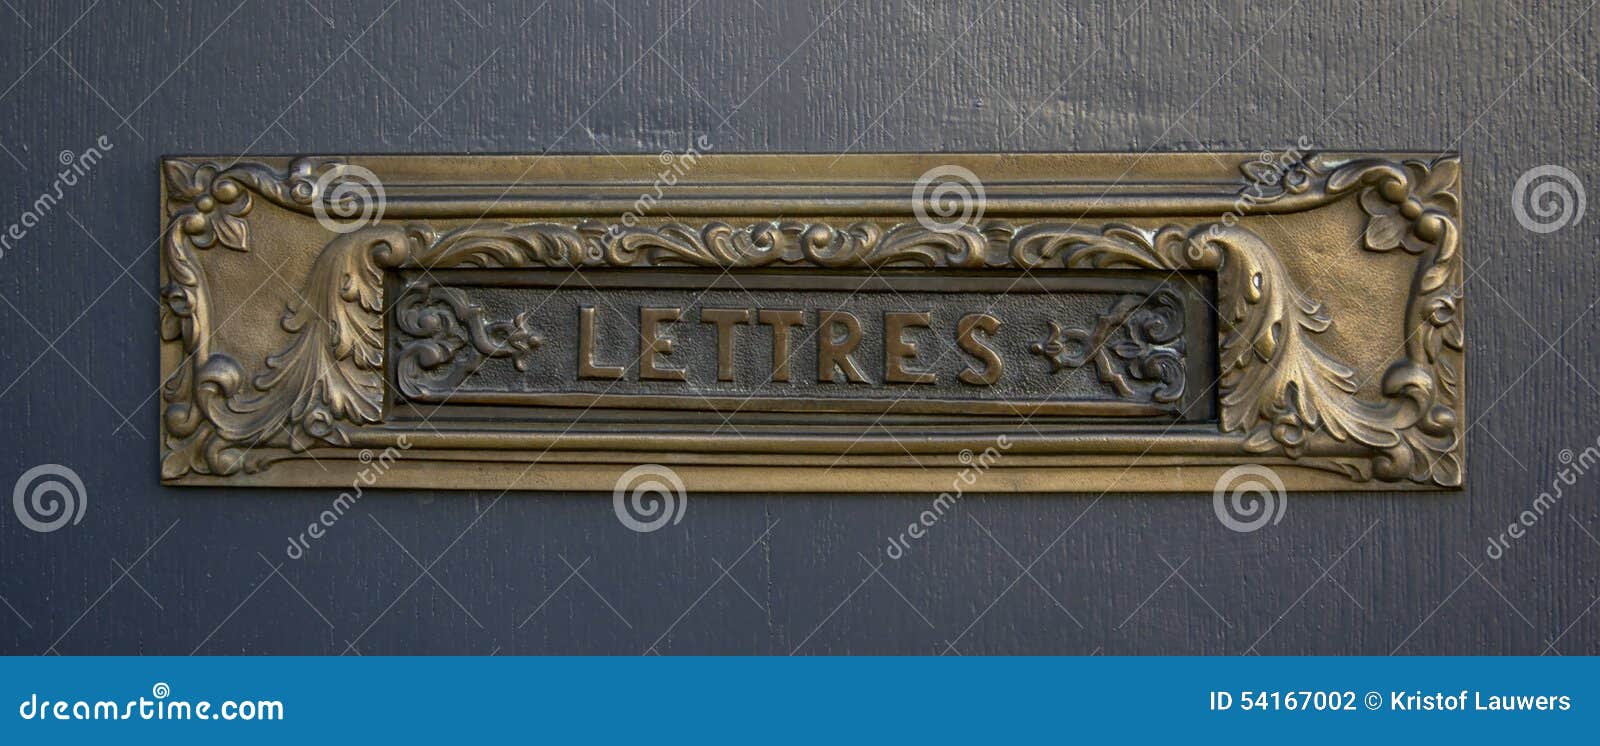 vintage letterbox with inscription lettres